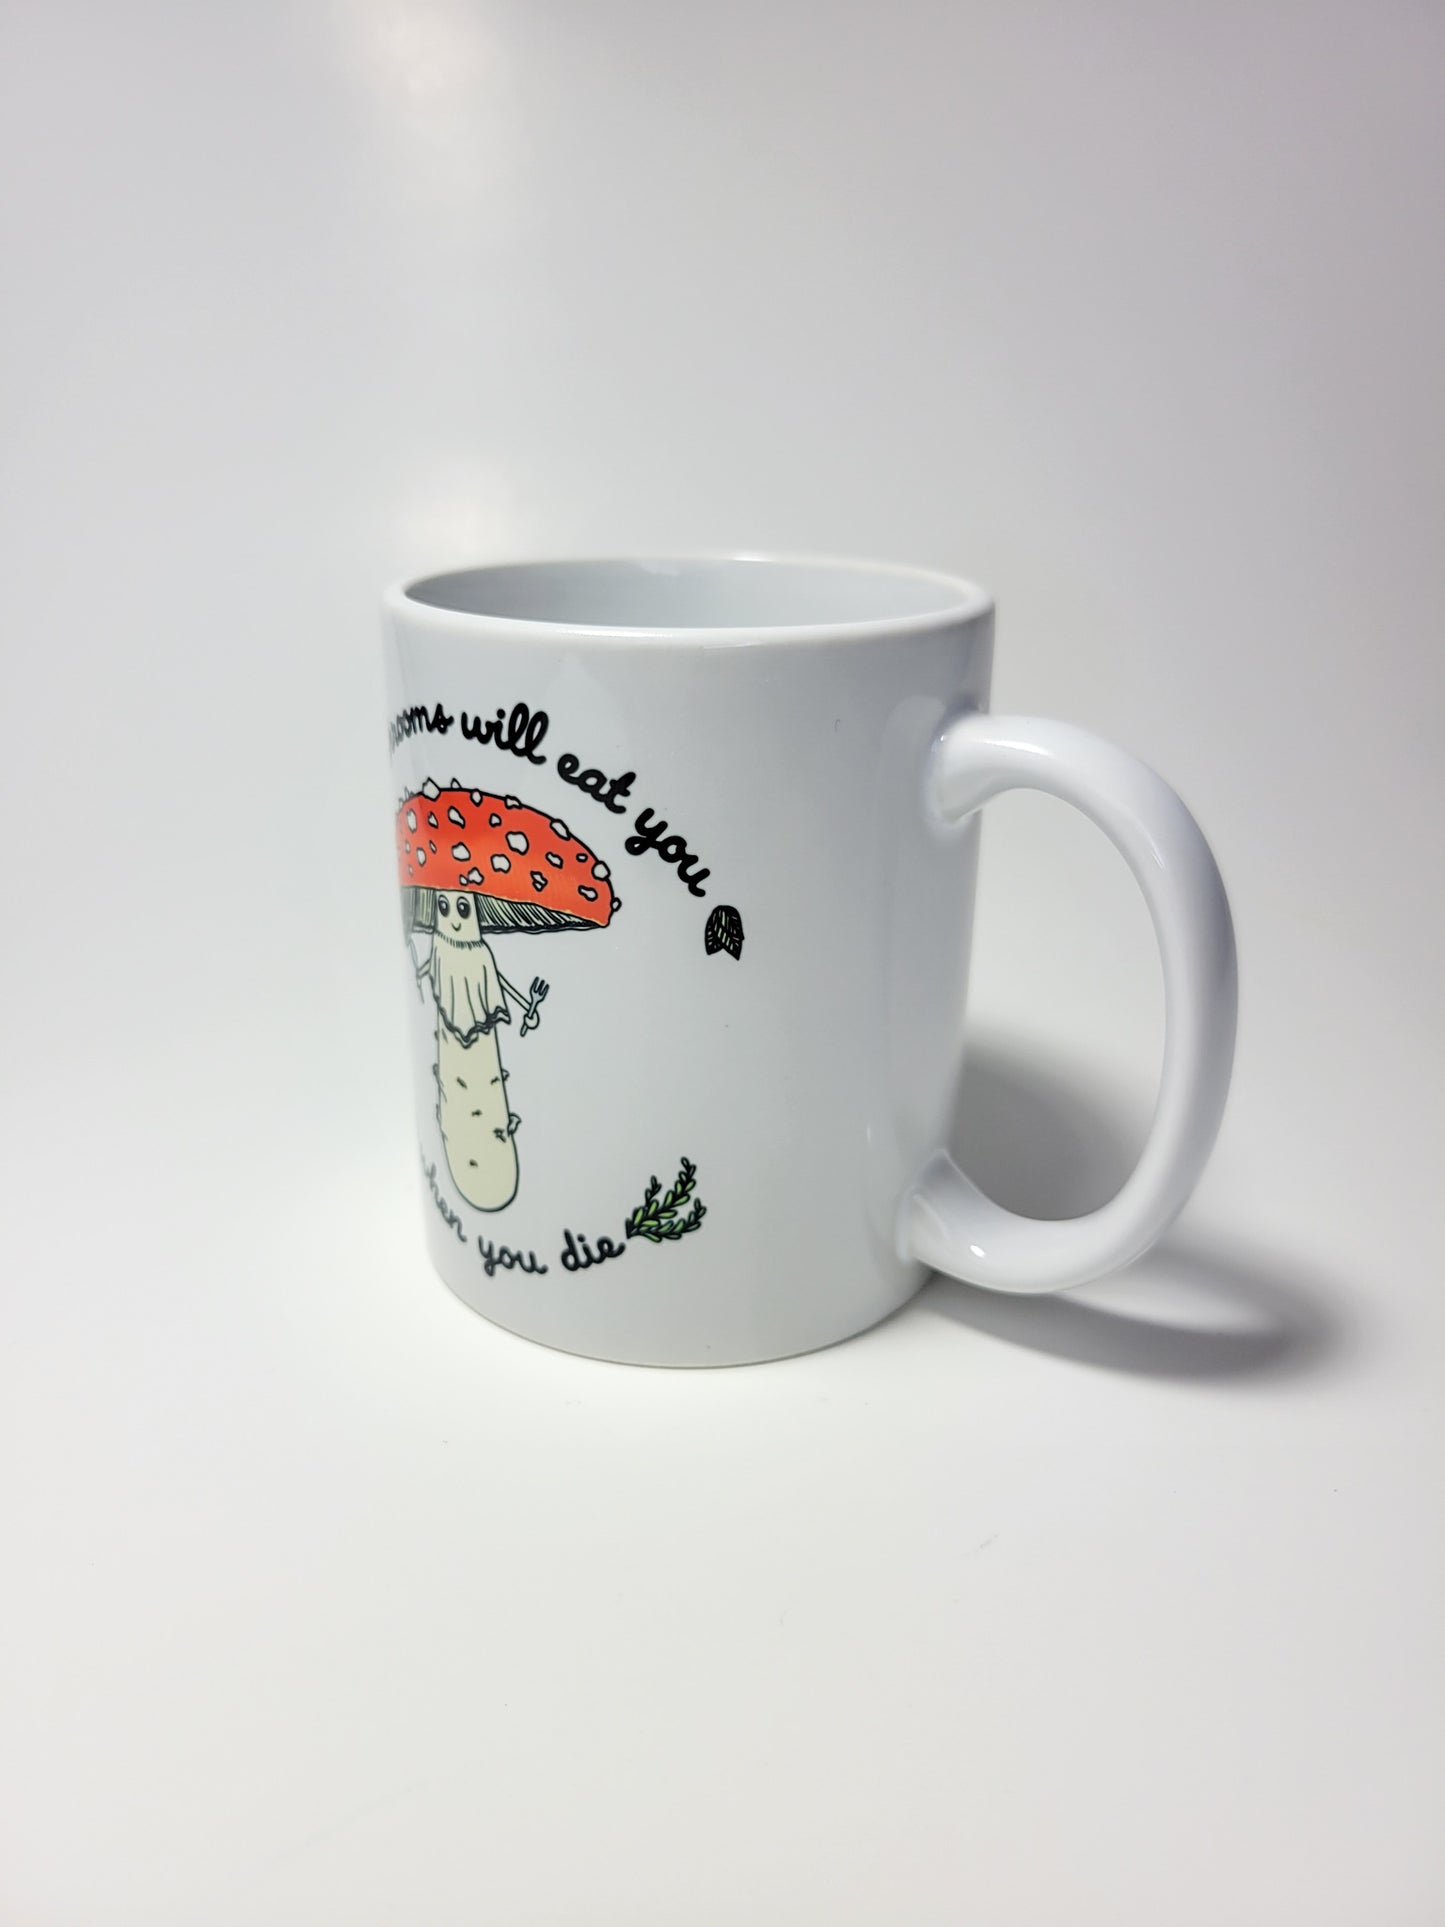 Mushrooms Will Eat You When You Die | Funny Mushroom Mug | Amanita Muscaria Artwork on Ceramic Cup | 11oz/15oz Sizes